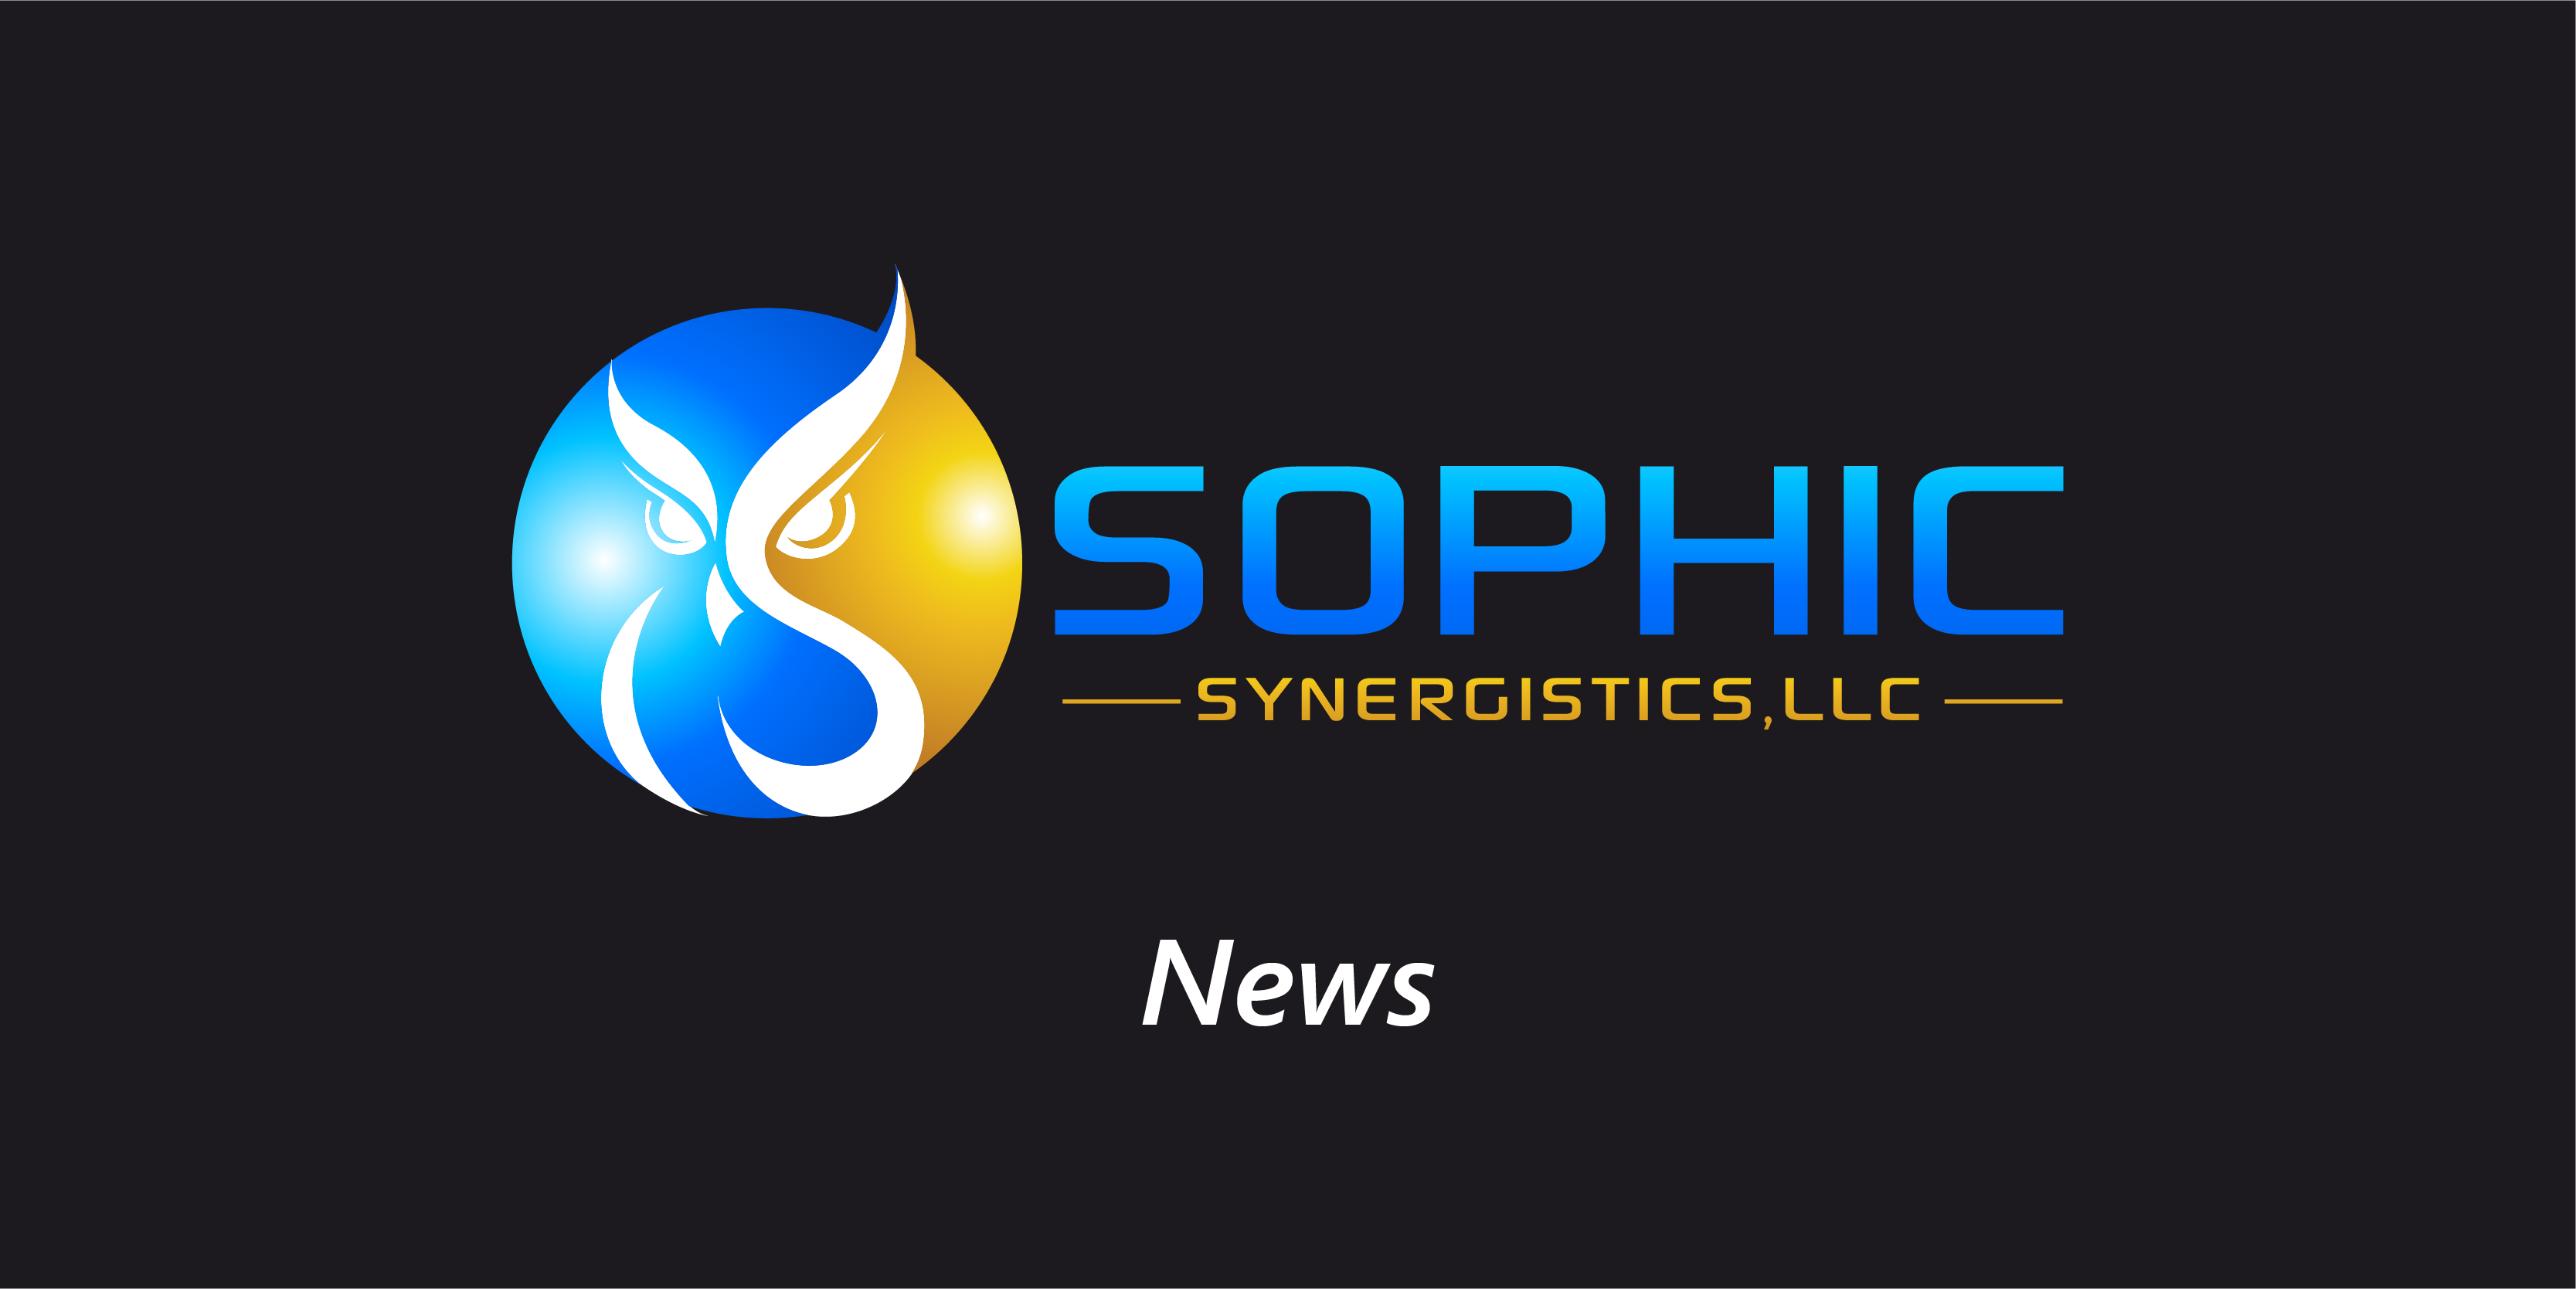 Sophic Synergistics, LLC News